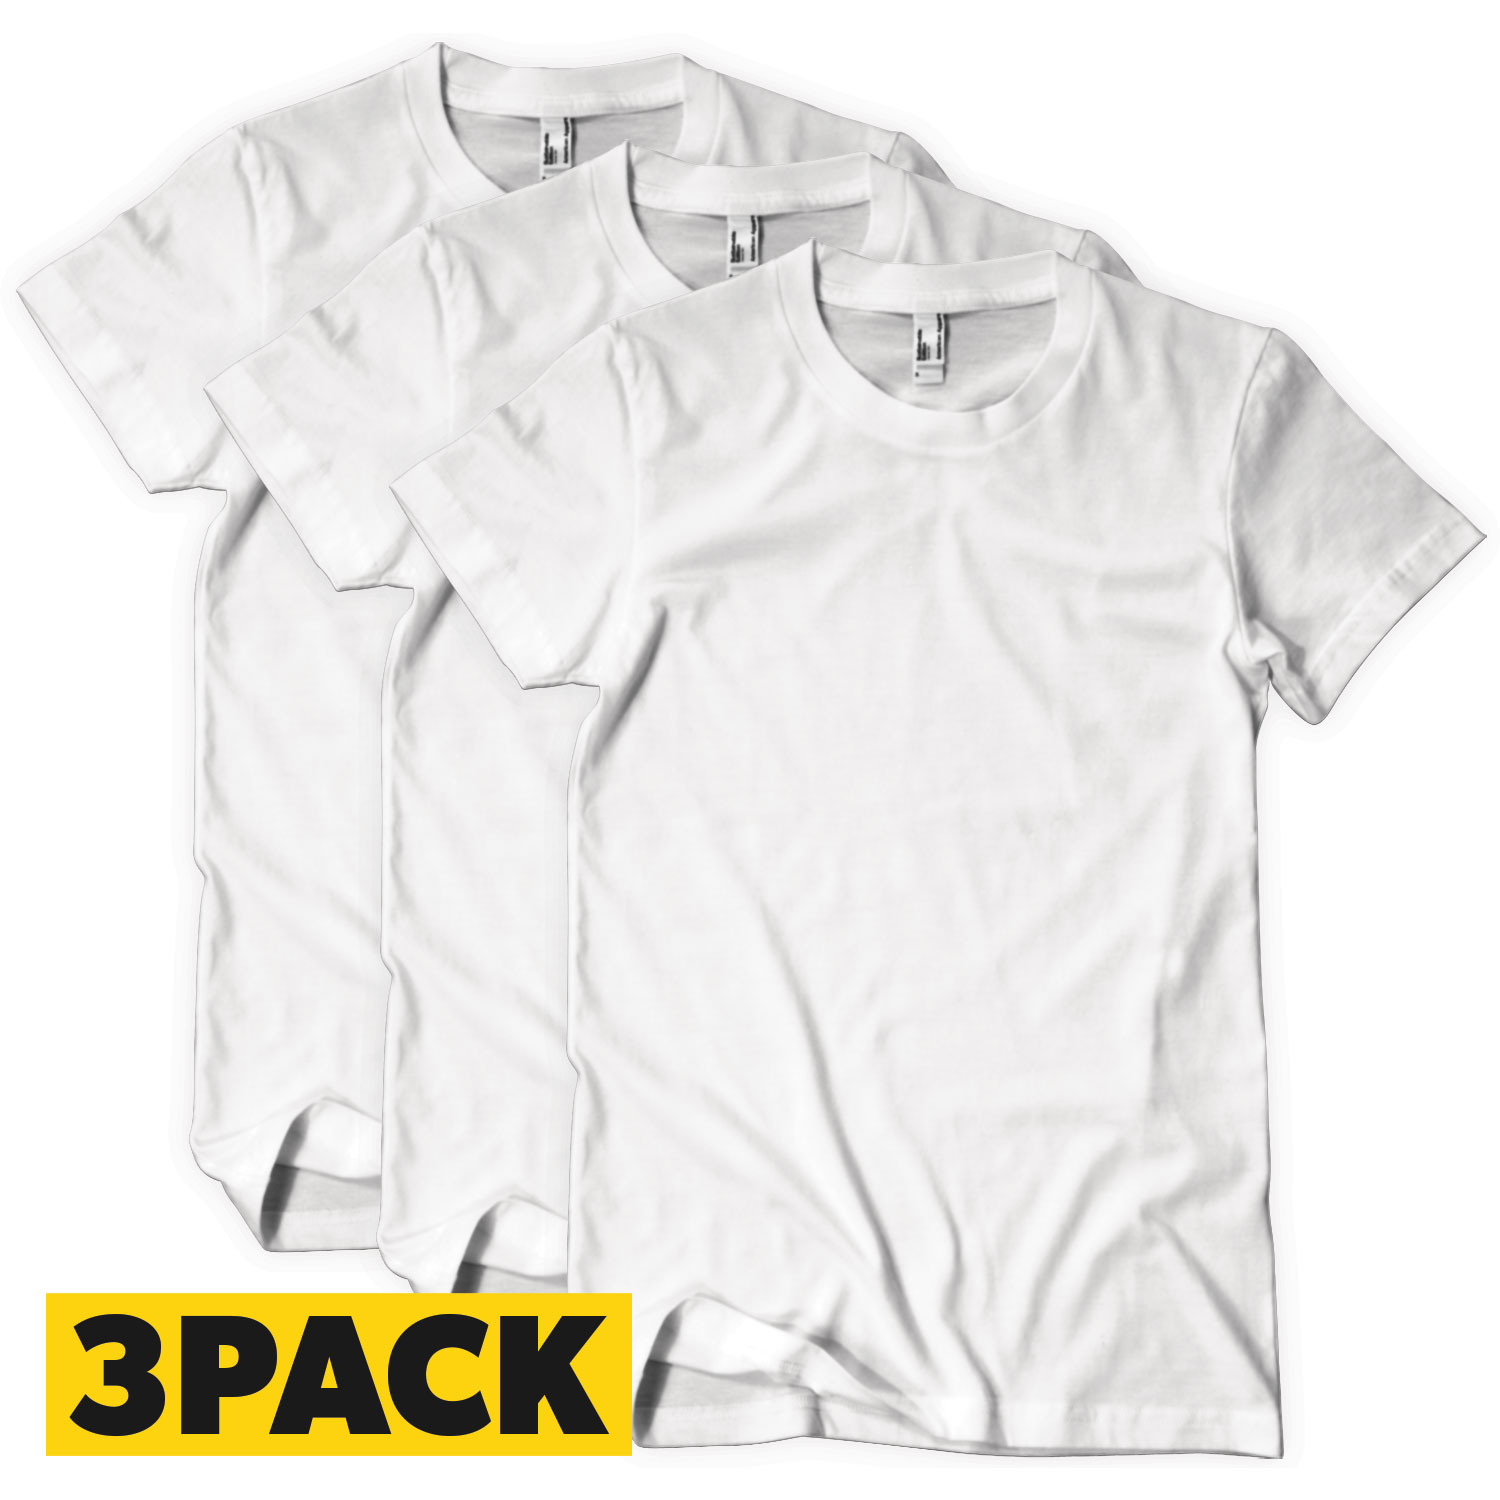 T-Shirts Big Pack Svart - 3 pack